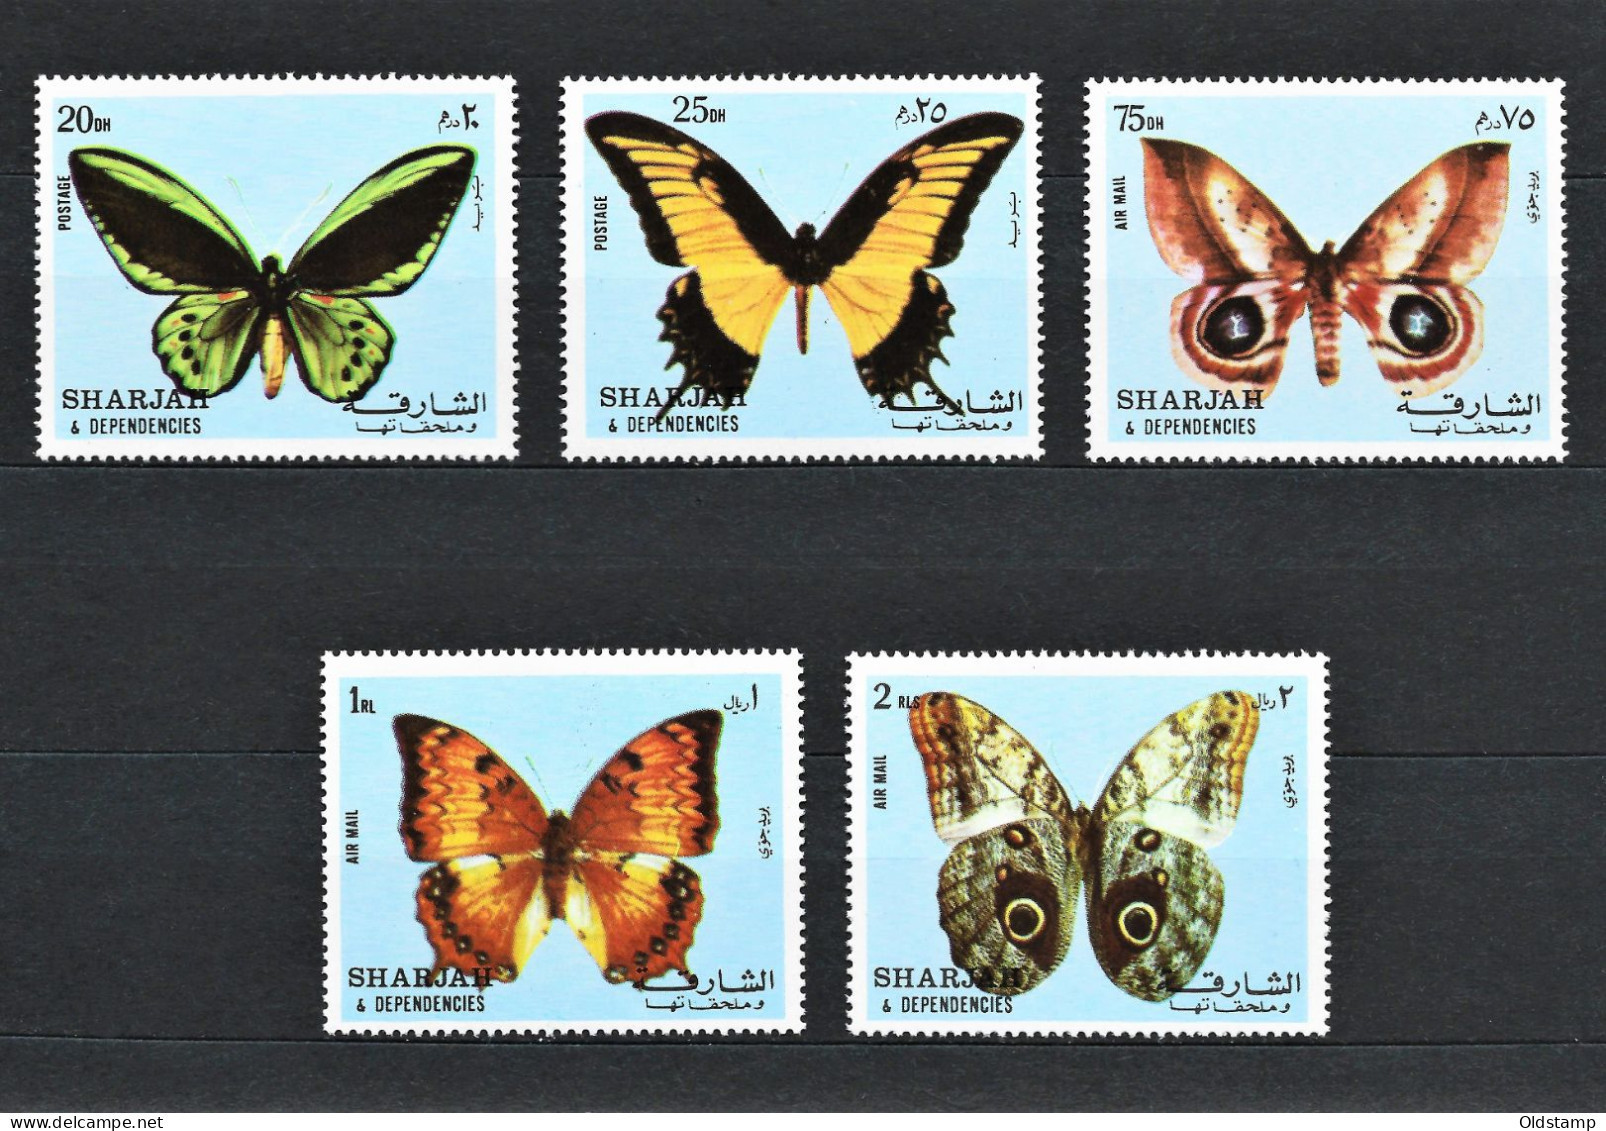 Sharjah 1972 Butterflies Insects Moth VLINDERS MARIPOSAS Fauna Wild Arabian UAE MNH Stamps Serie Full Set Mi.# 1018-1022 - Papillons